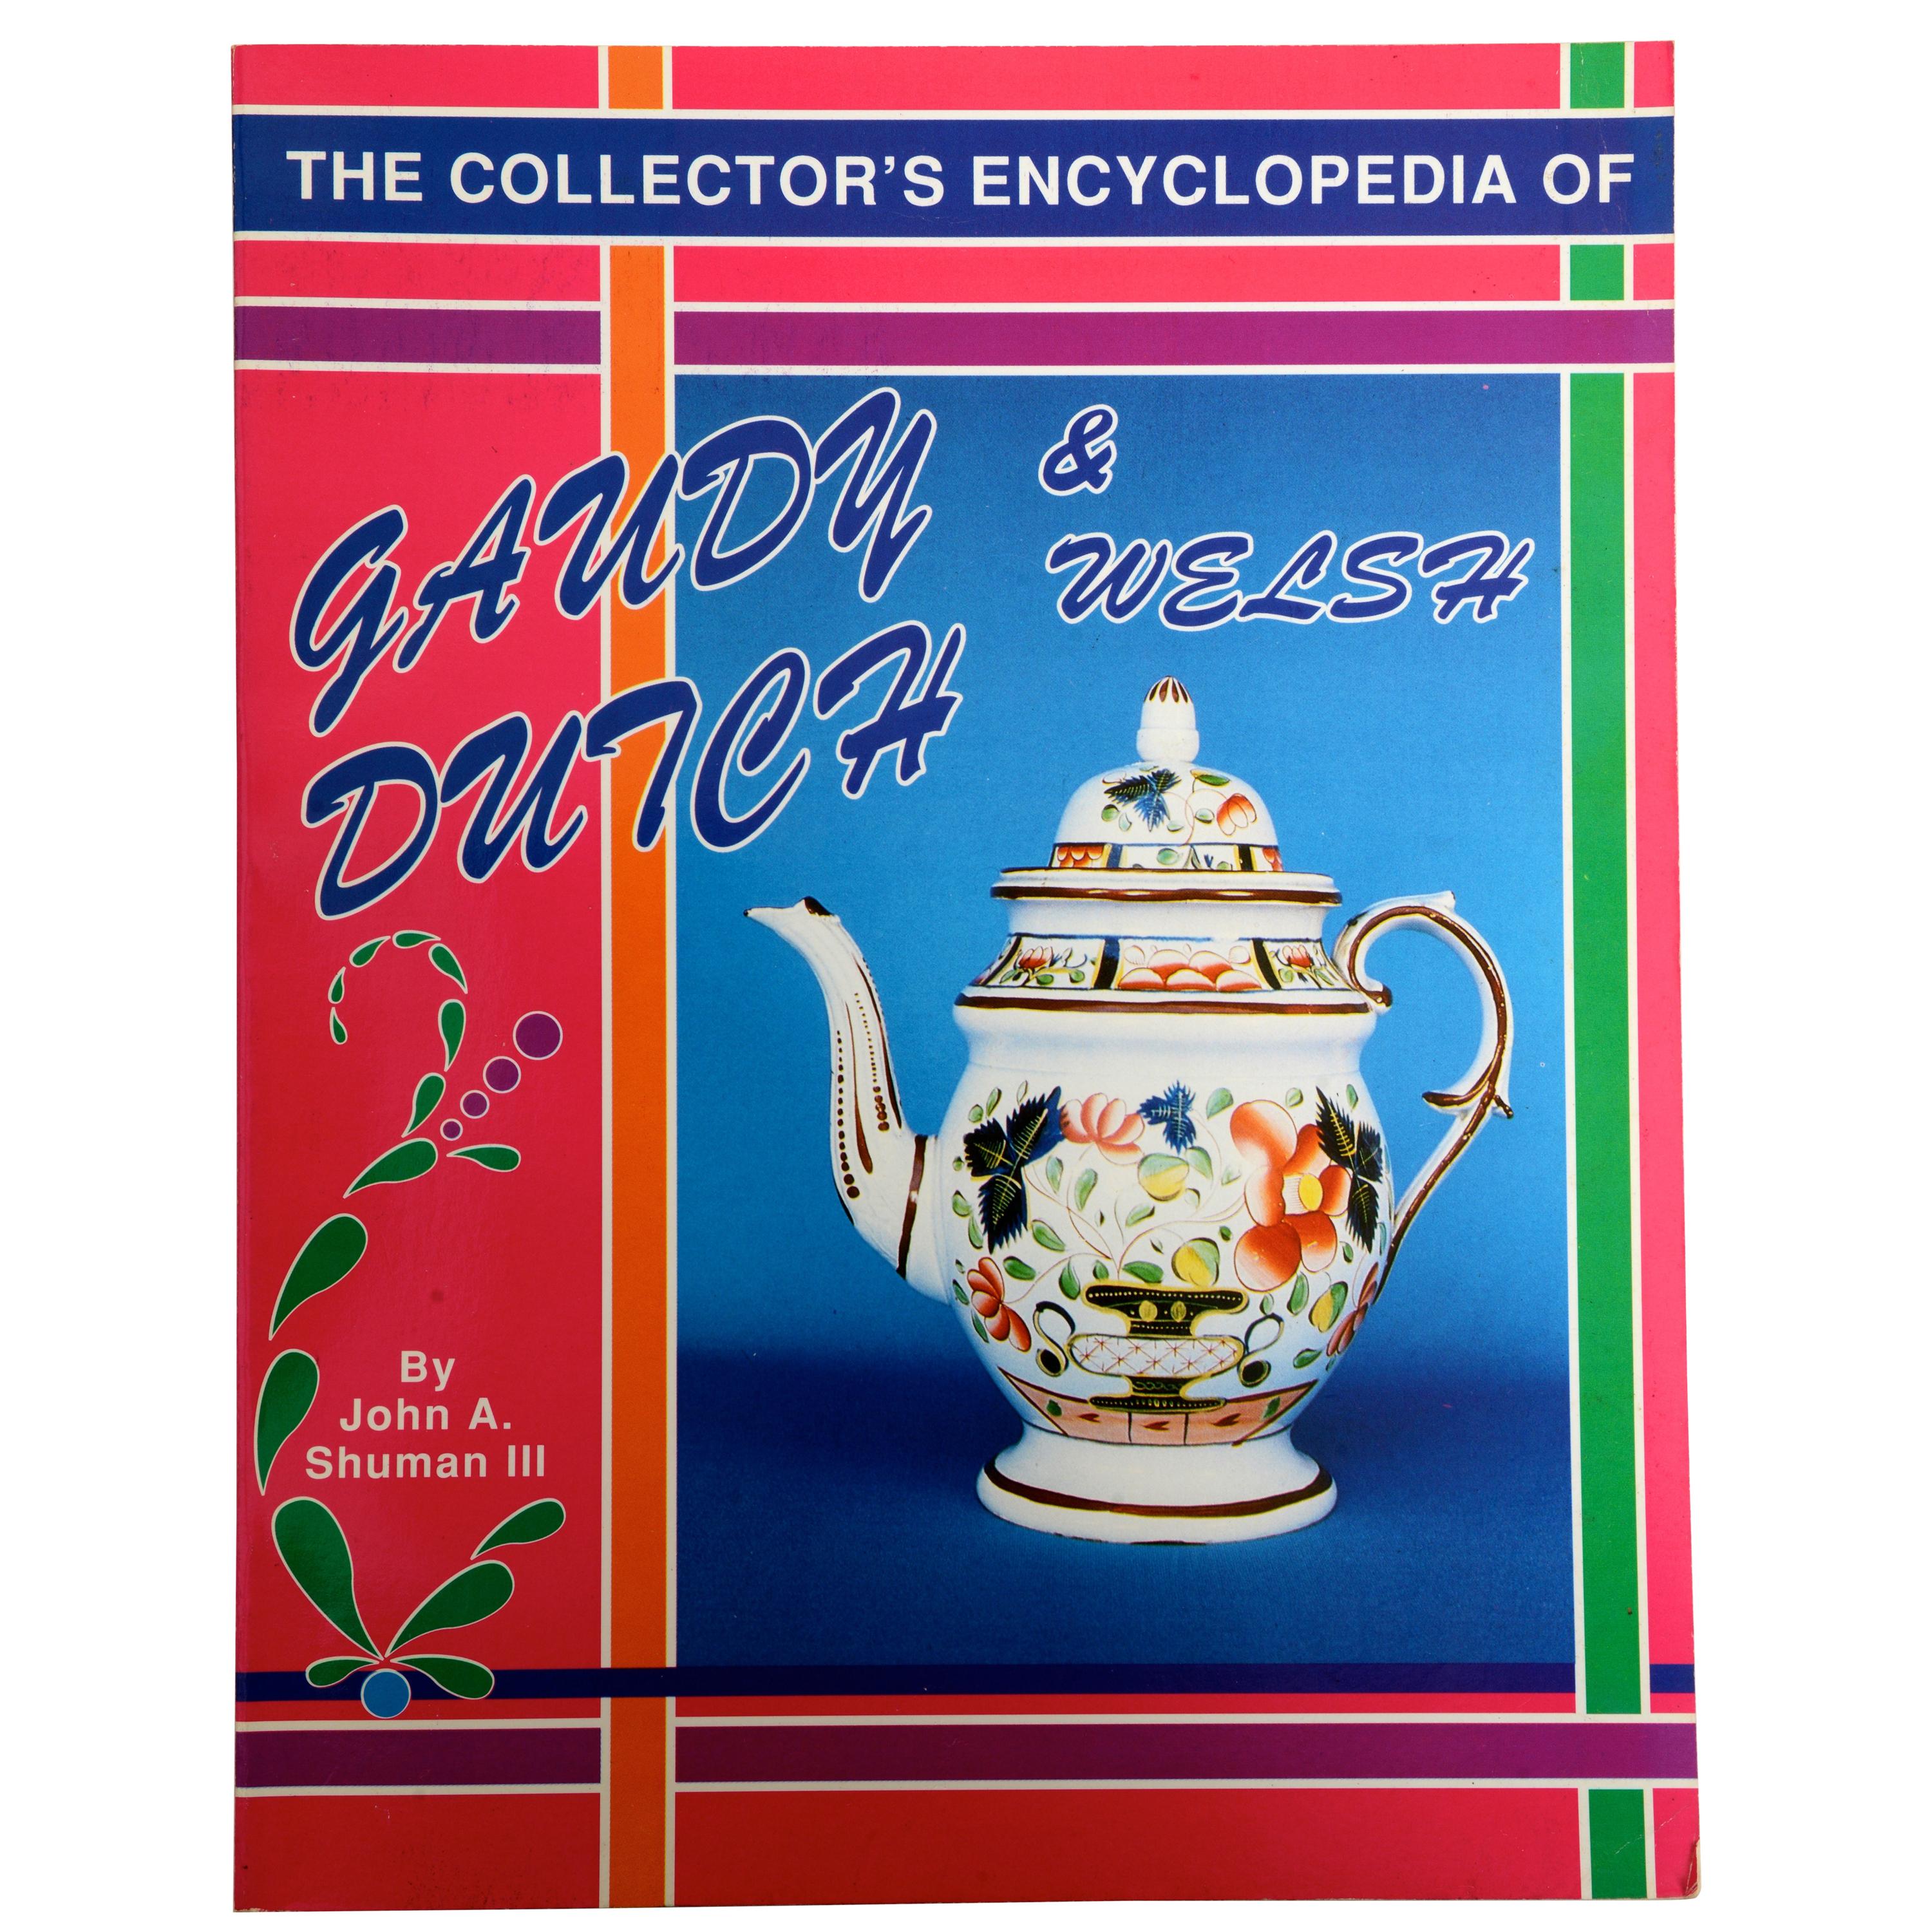 The Collector's Encyclopedia of Gaudy Dutch and Welsh par John Human:: première édition